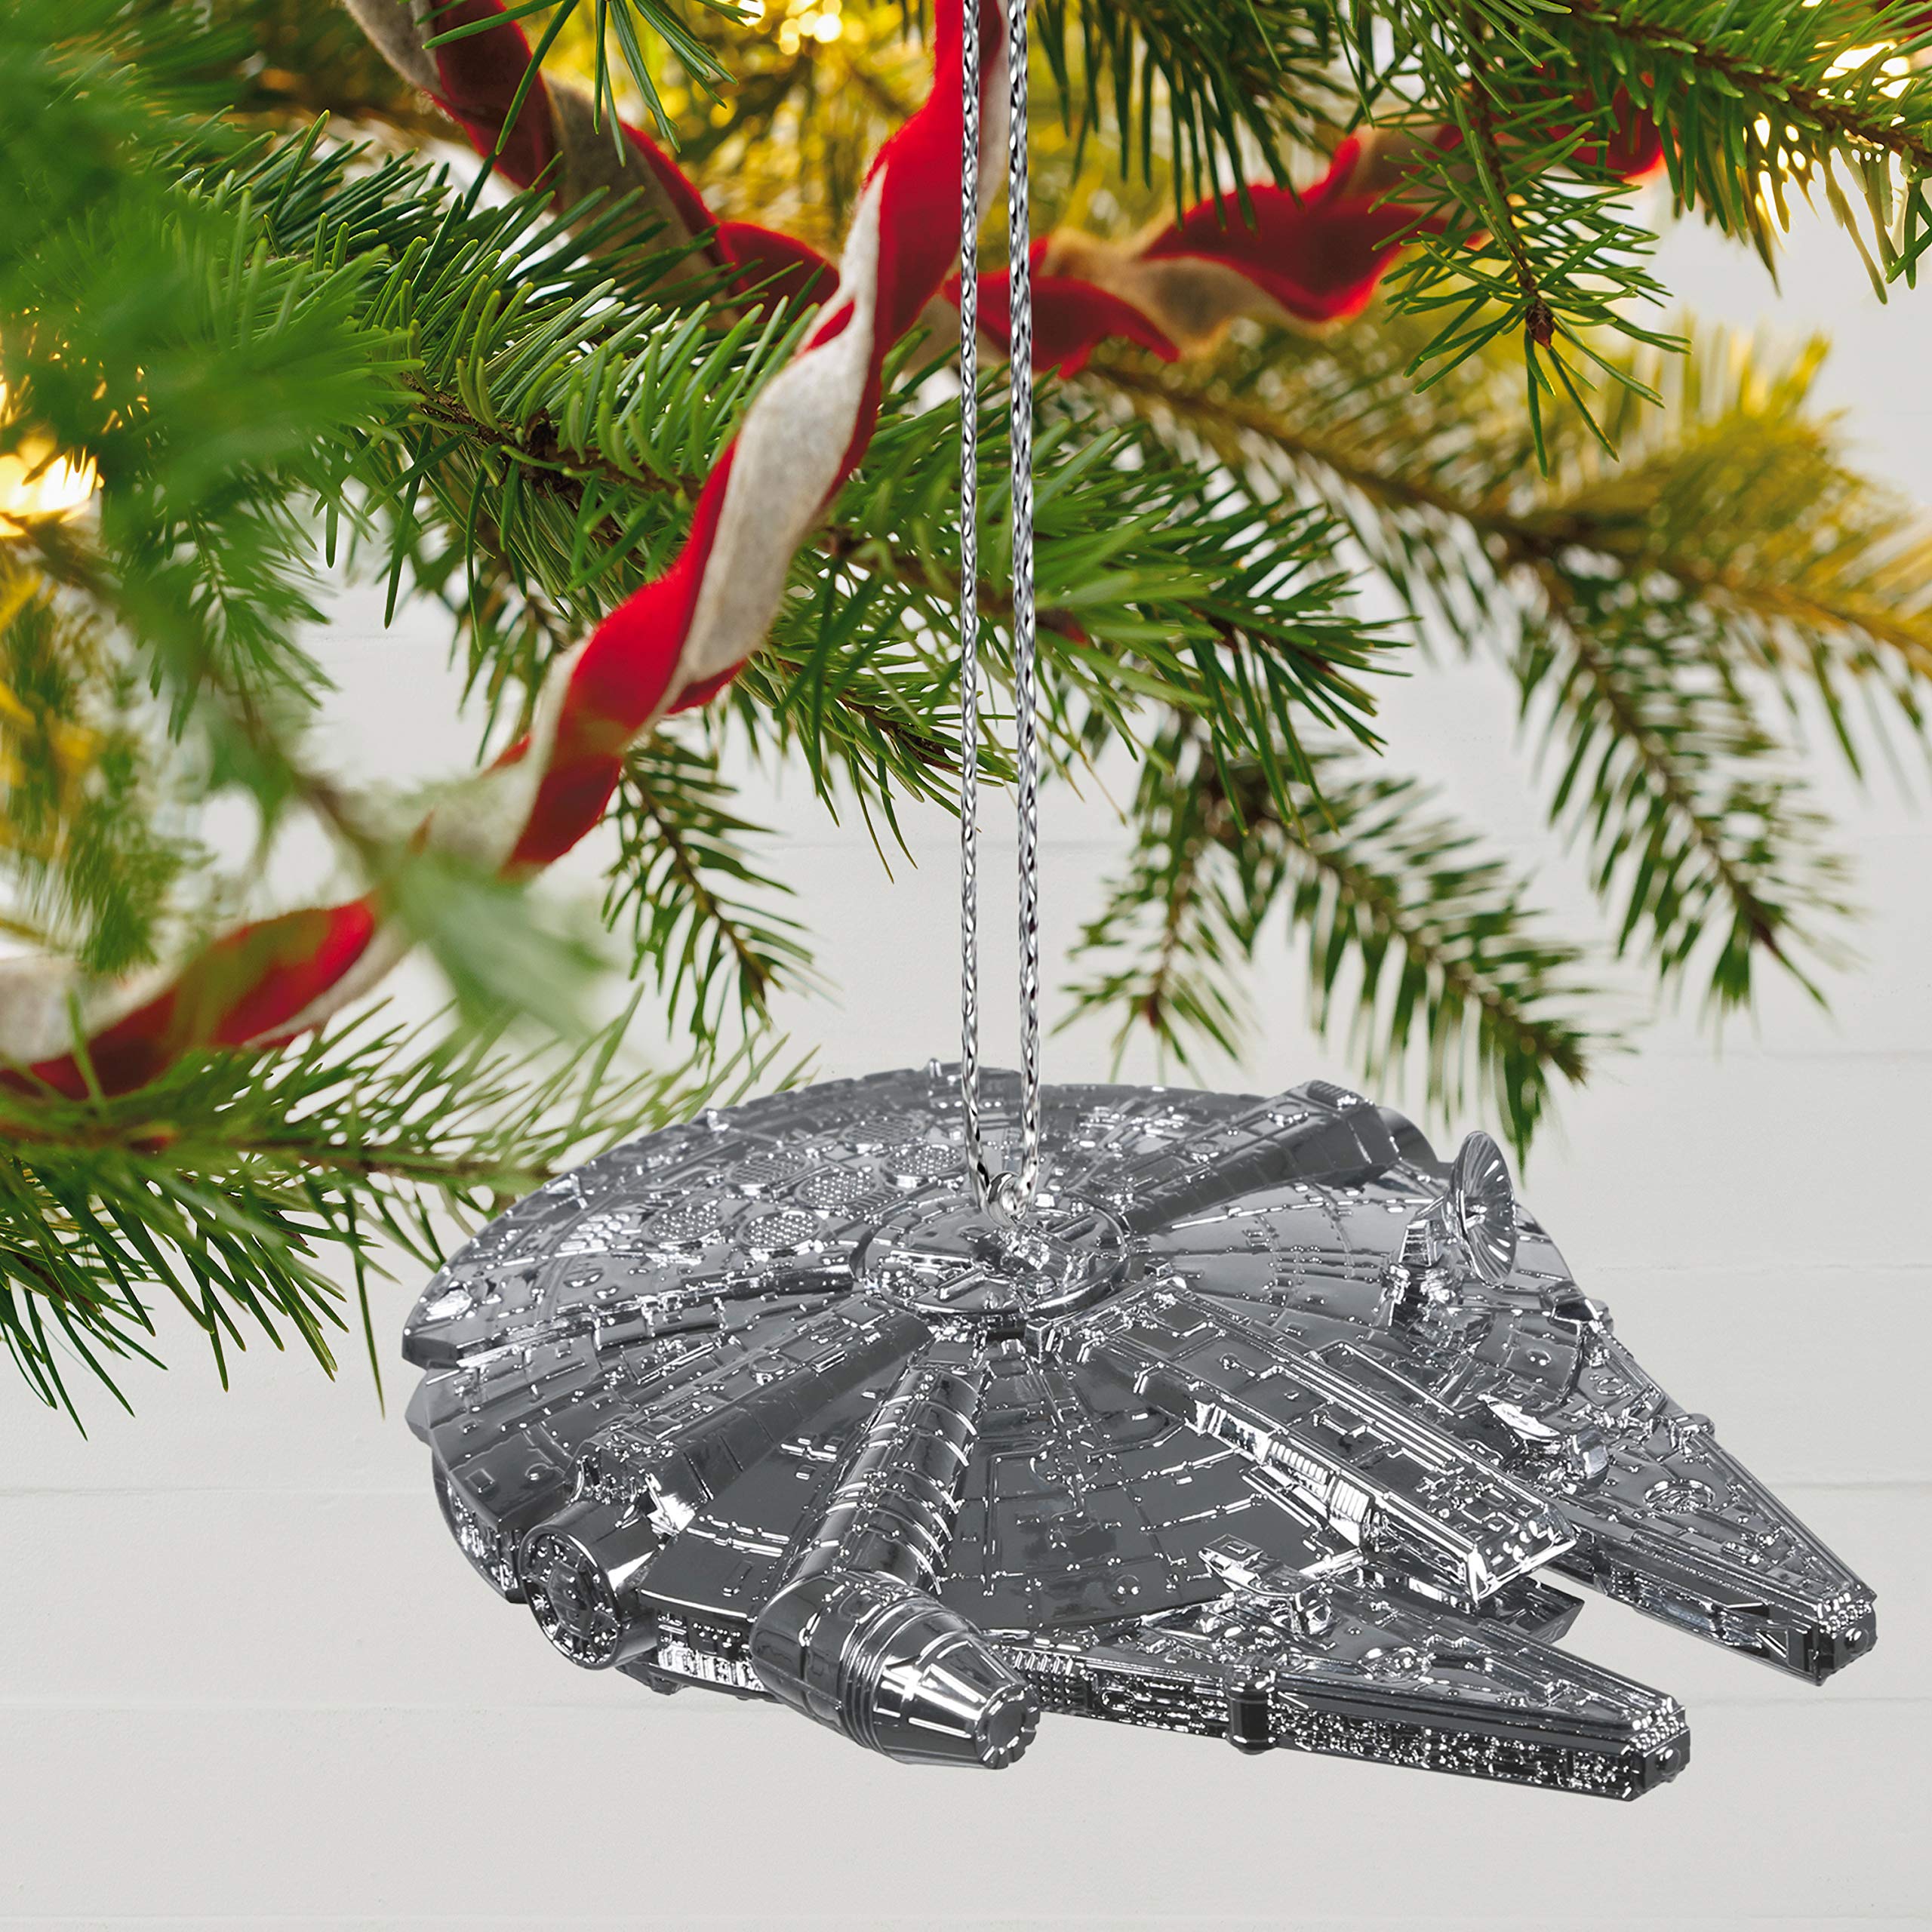 Star Wars Millennium Falcon Hallmark Keepsake Christmas Ornament 2021